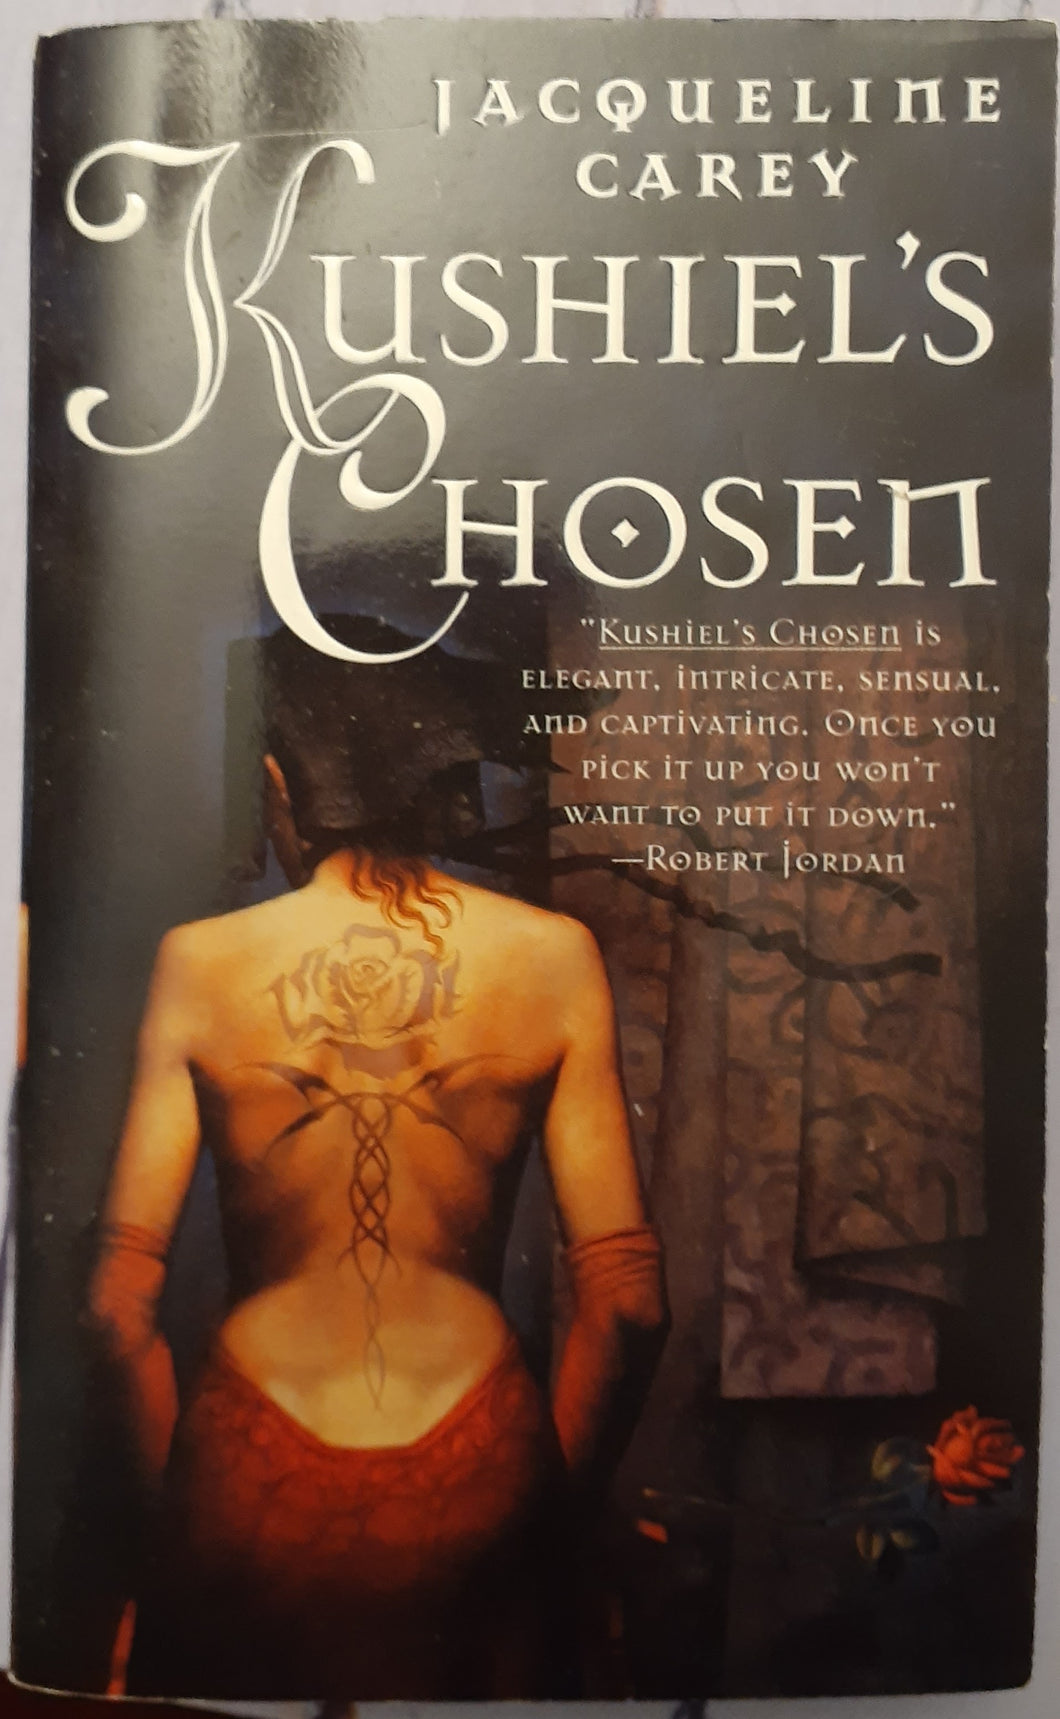 Kushiel's Chosen (Phèdre's Trilogy #2)